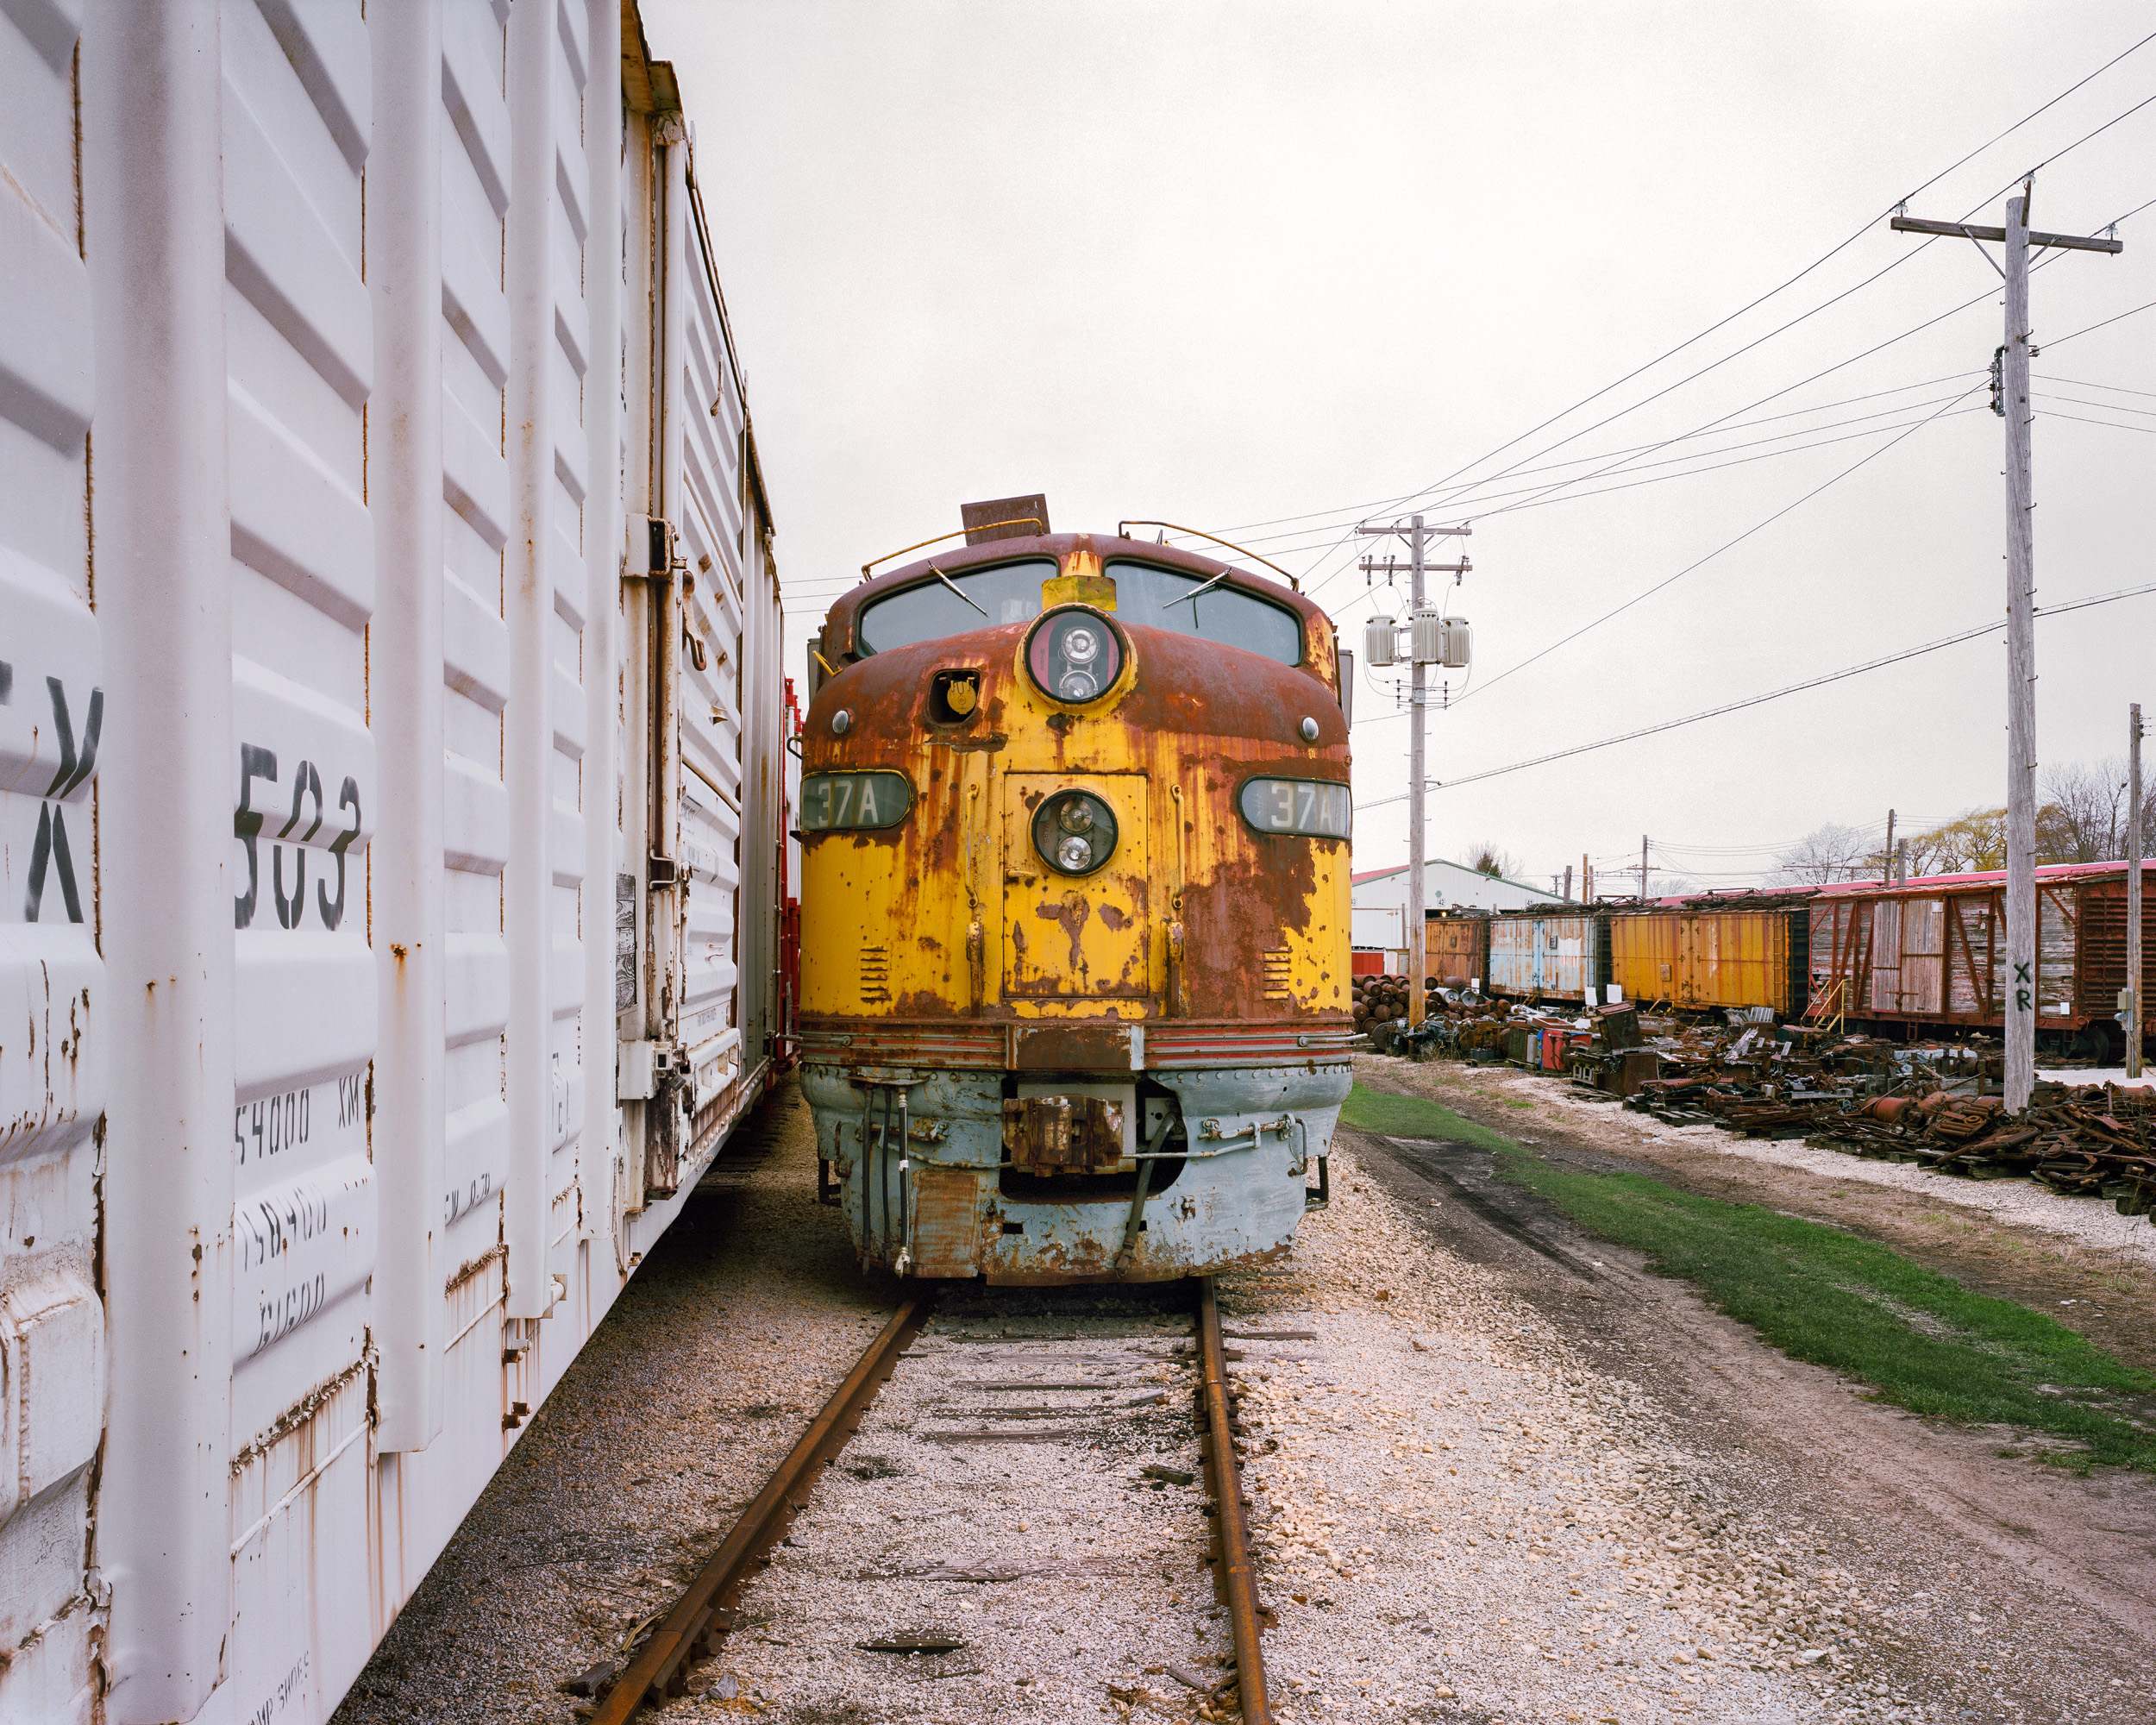 Milwaukee Road 37A, Illinois Railway Museum